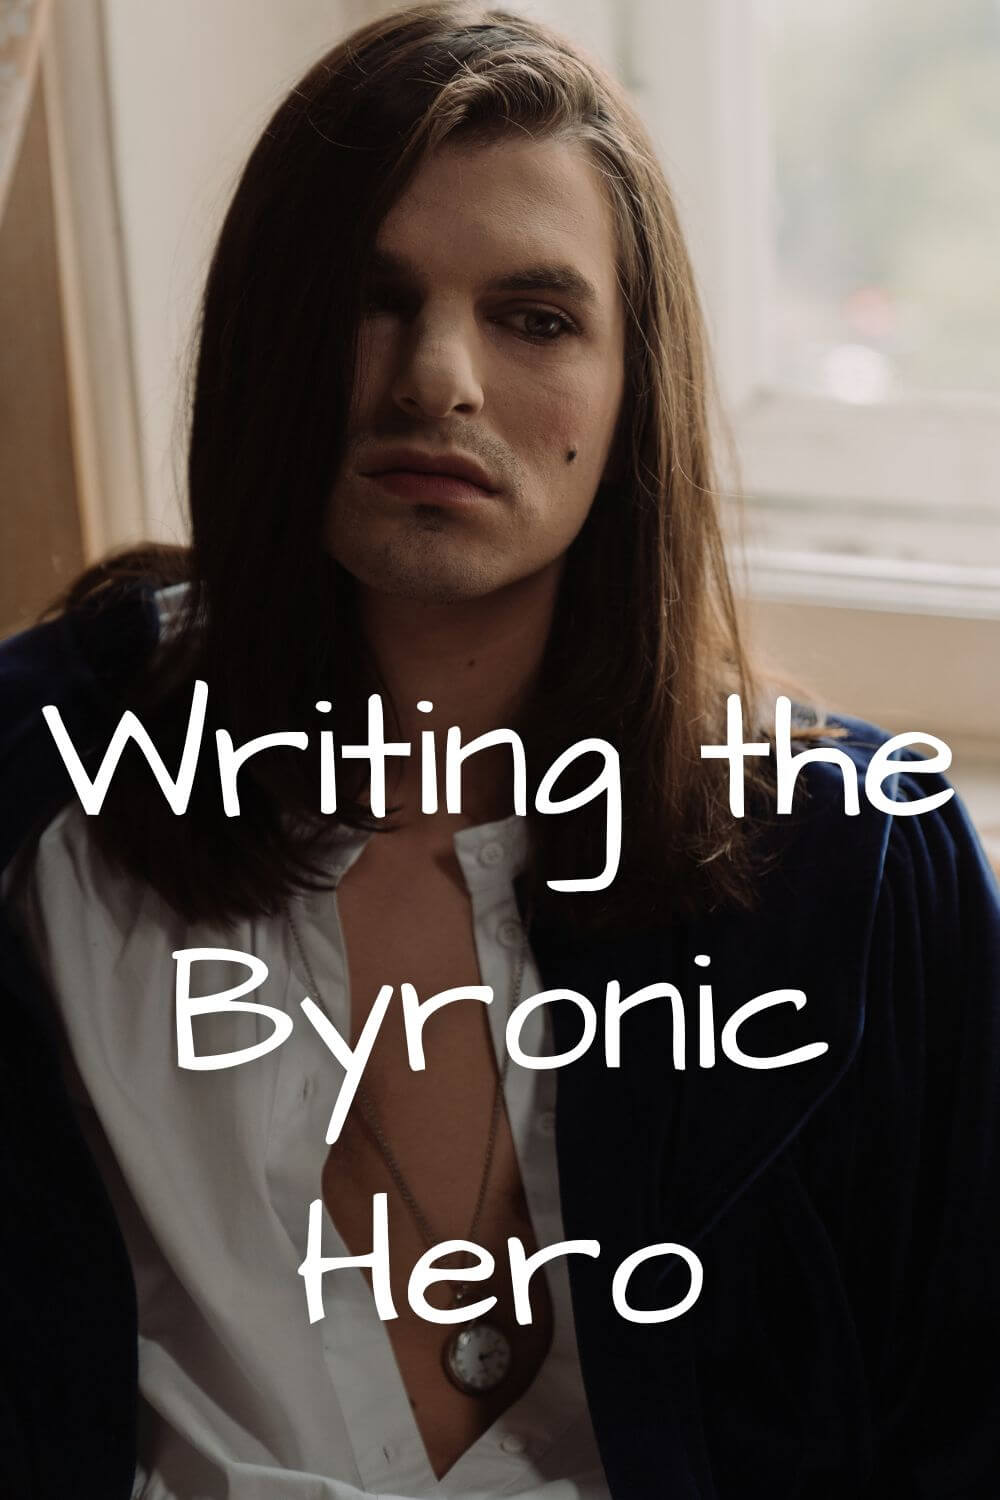 writing the Byronic hero